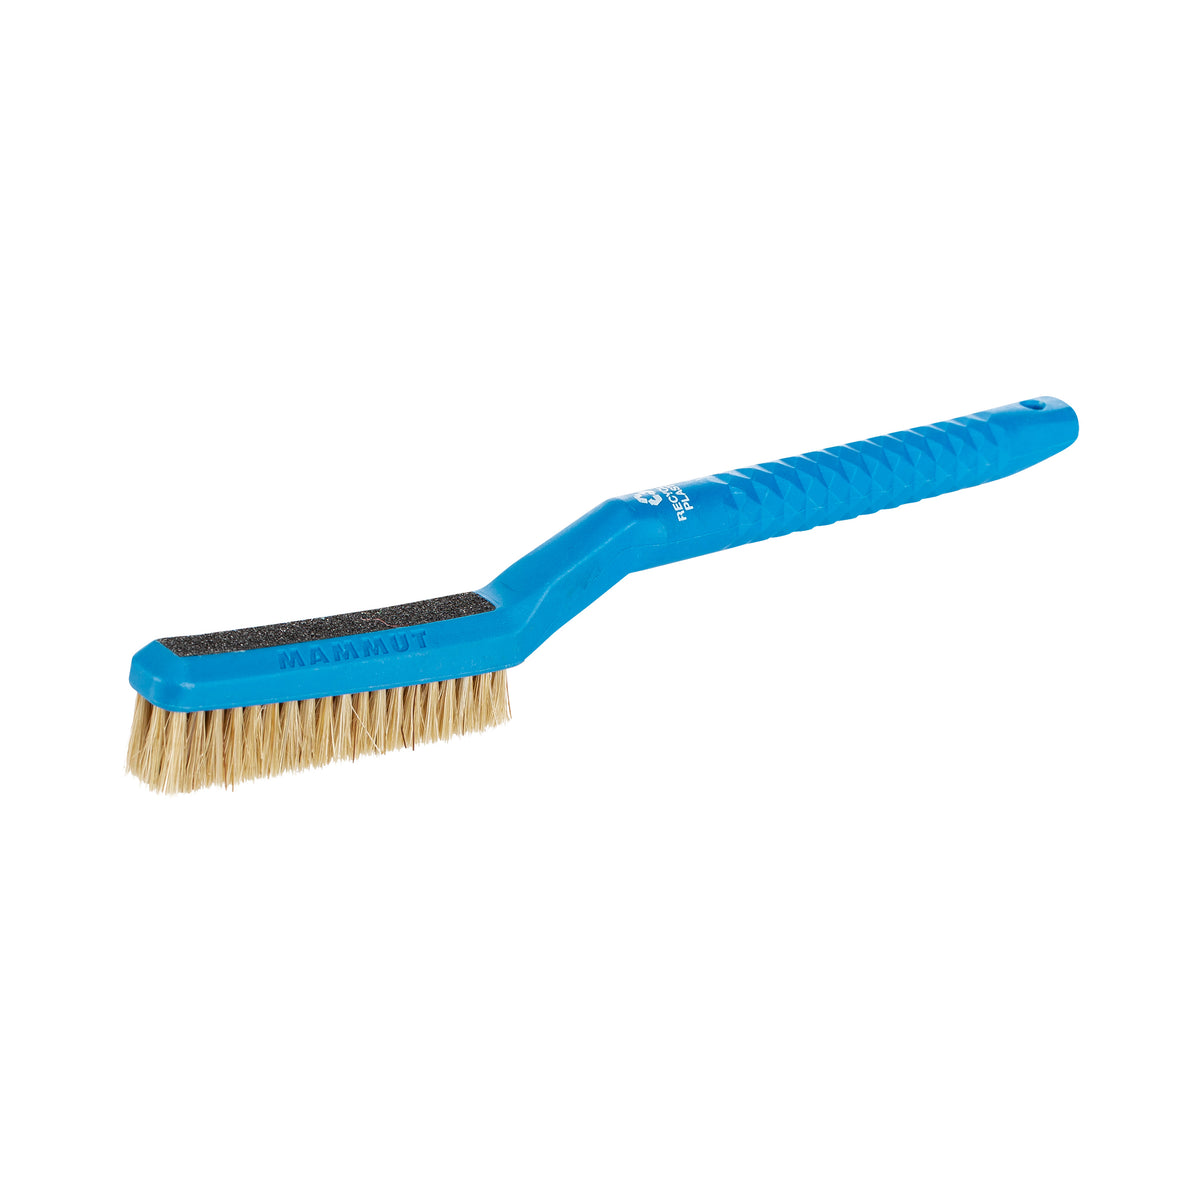 Mammut Sender Brush in blue, showing nail file